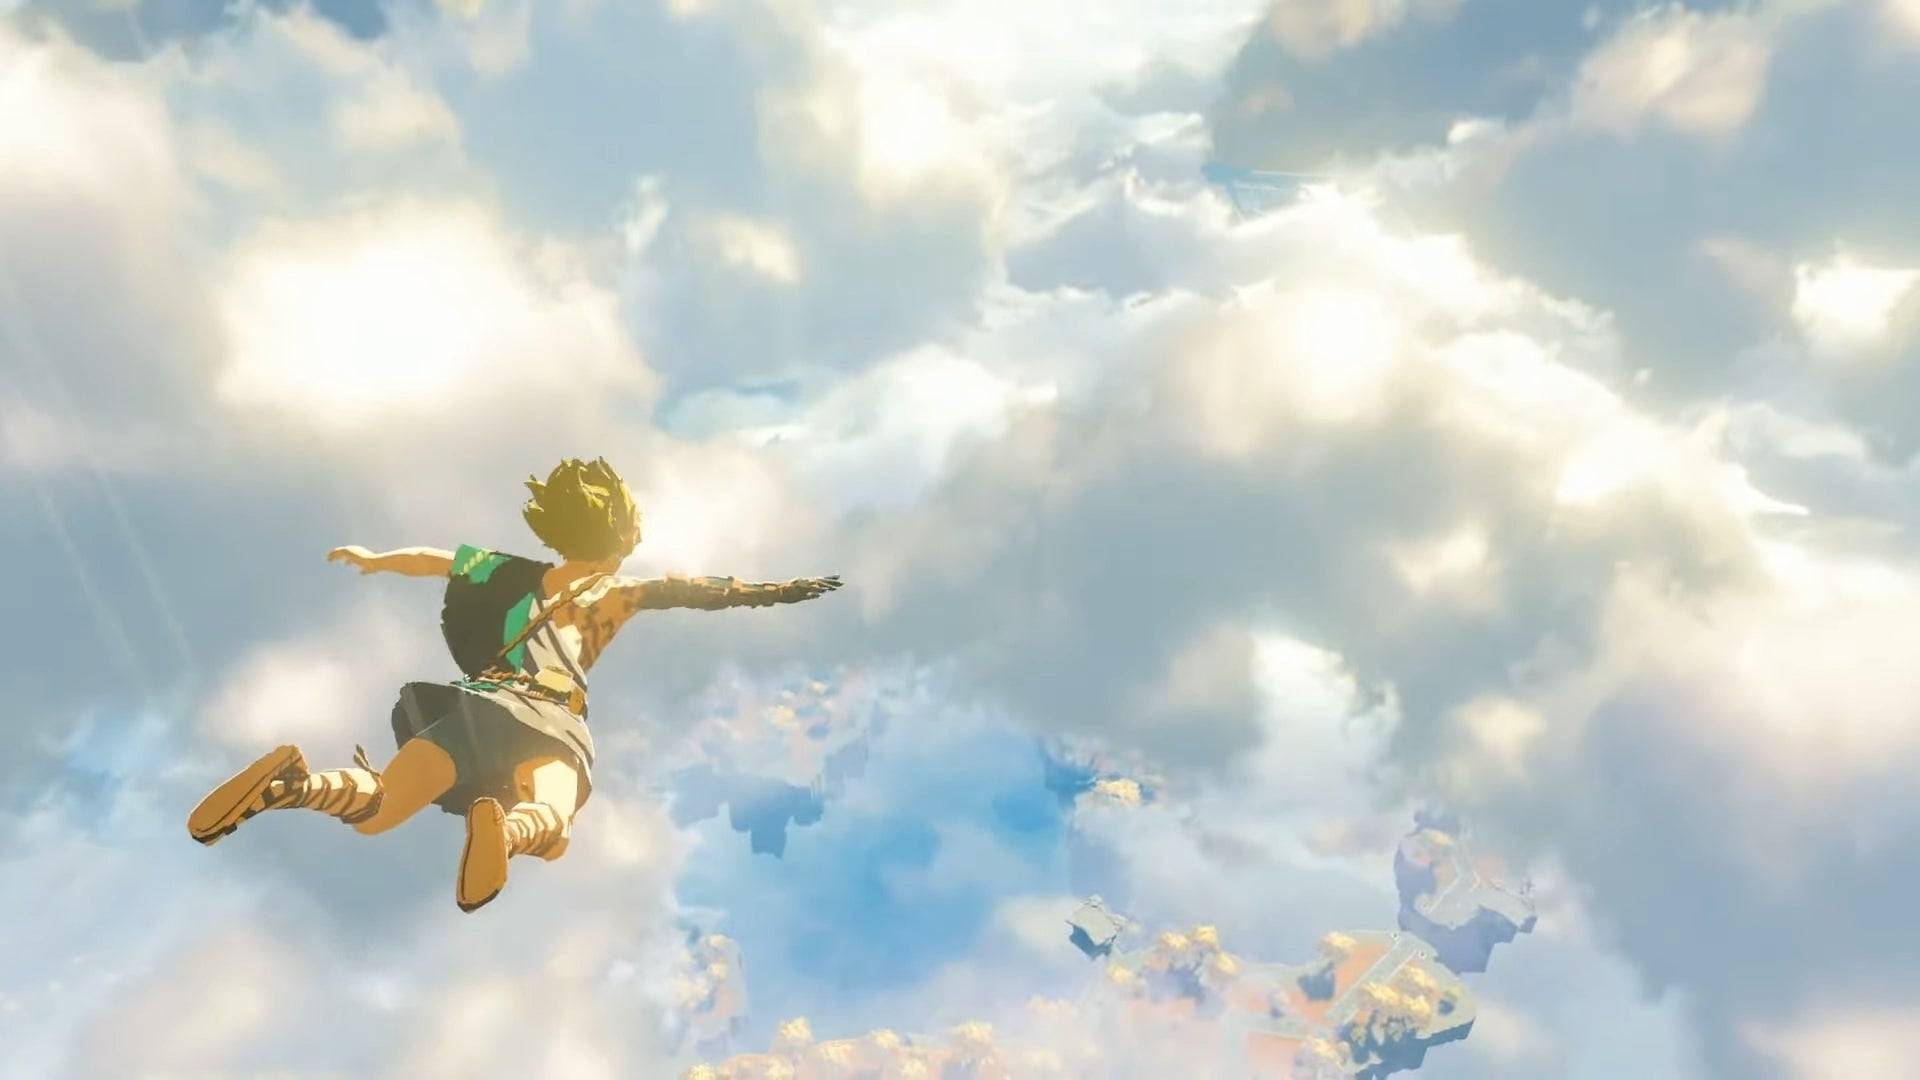 Zelda: Breath of the Wild sequel delayed until 2023